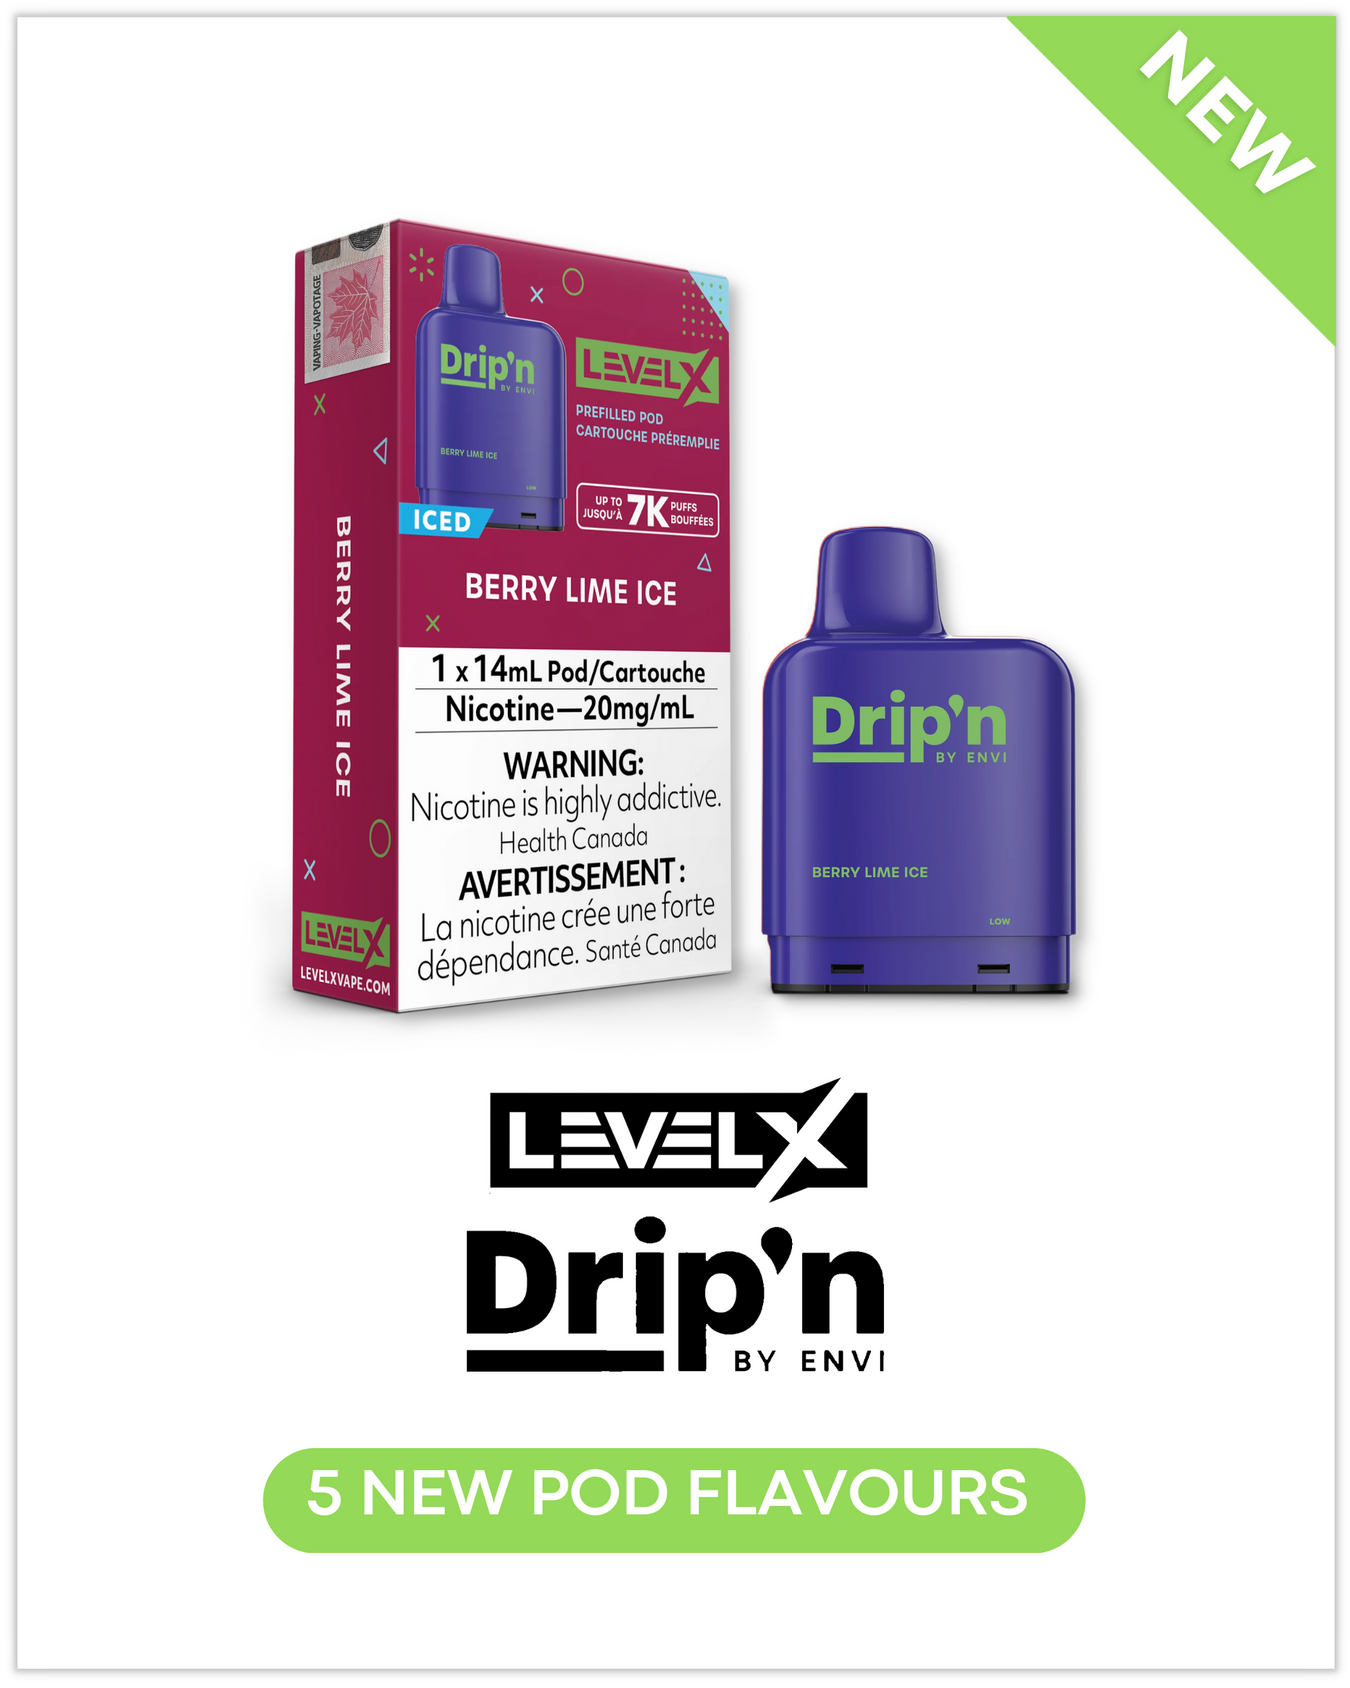 Level X Drip'n by ENVI Pods